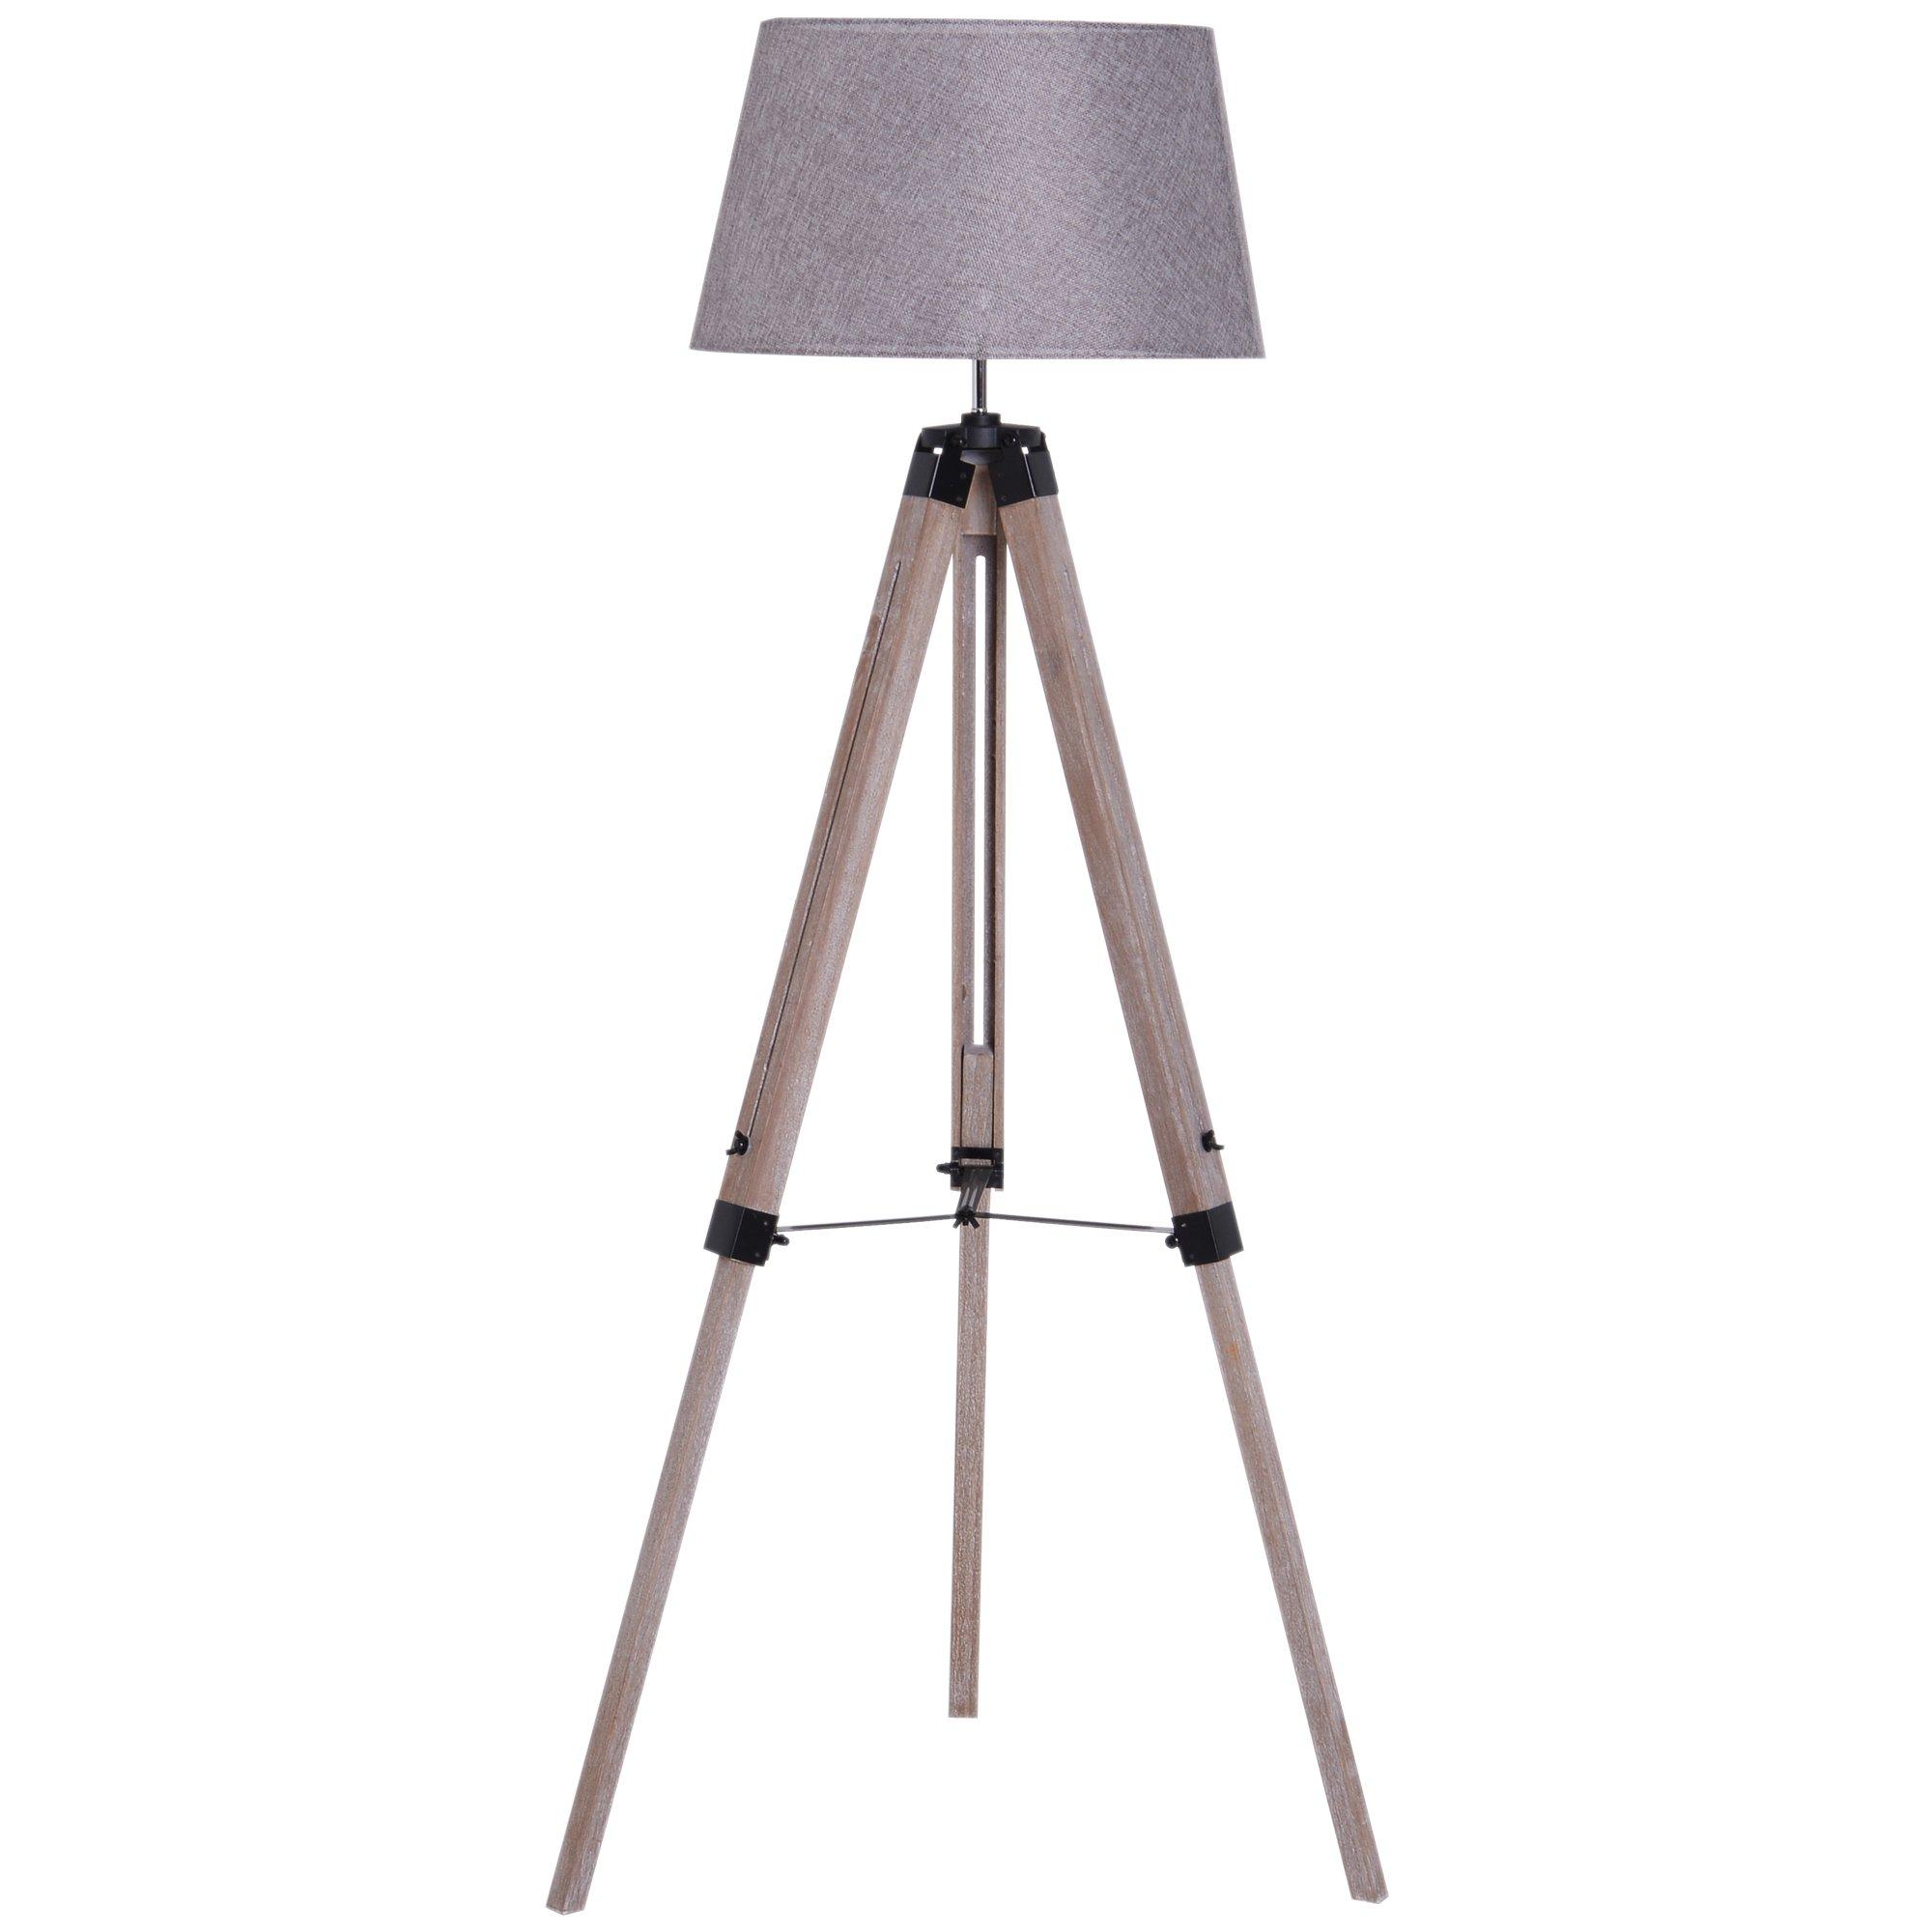 Free Standing Floor Lamp Bedside Light Tripod Holder Fabric Shade